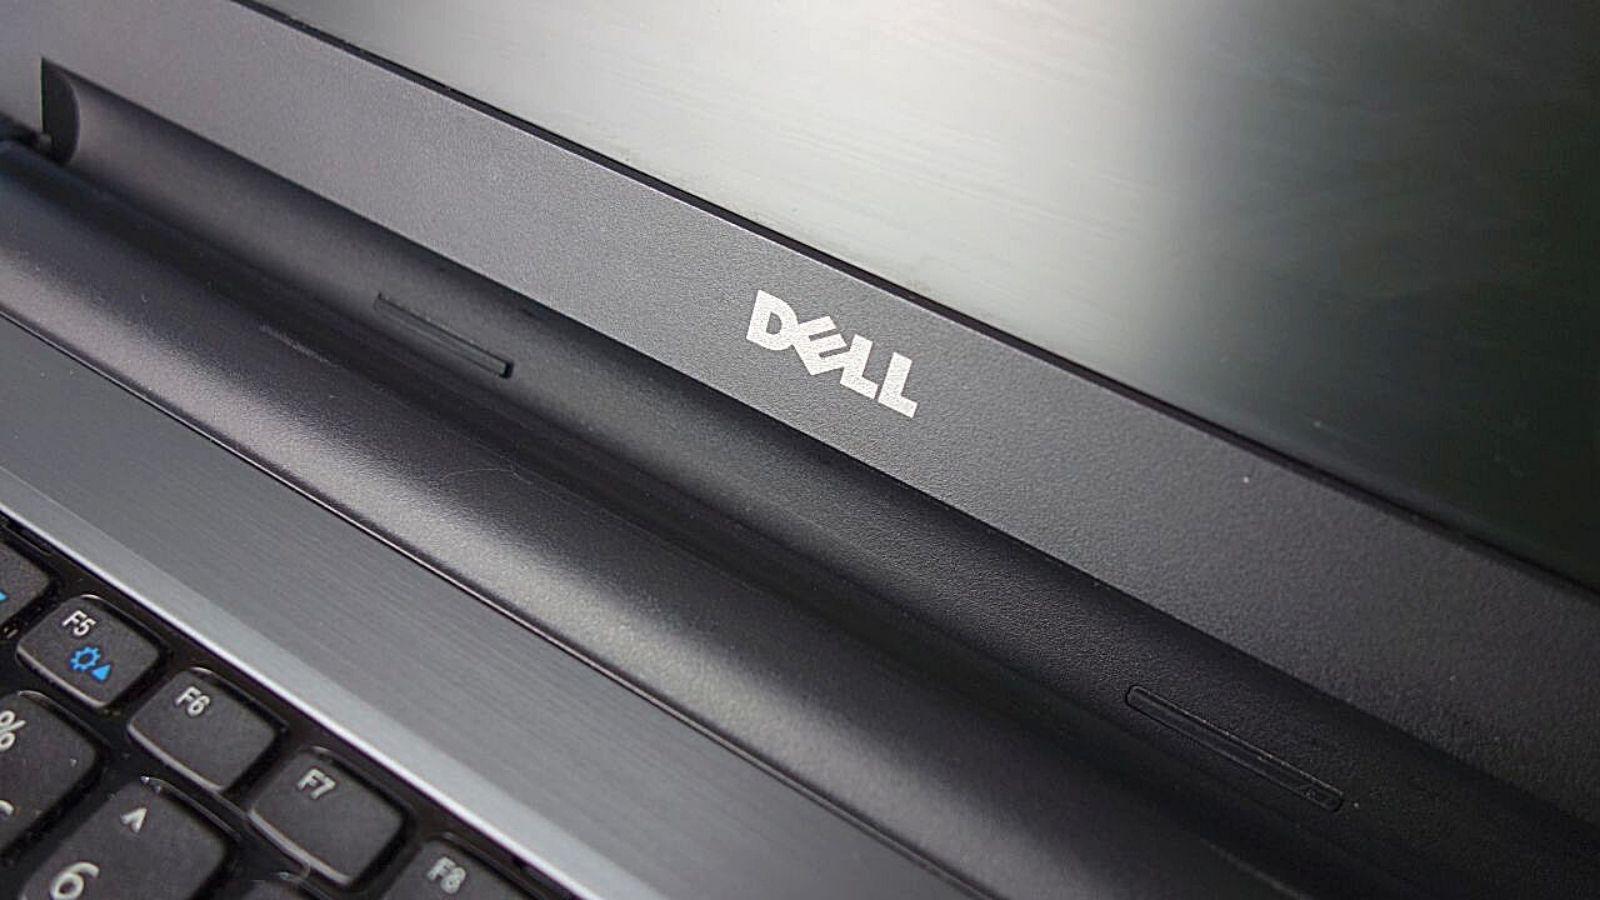 DELL rozstrzygnął przetarg! Dell Technologies mediarun dell